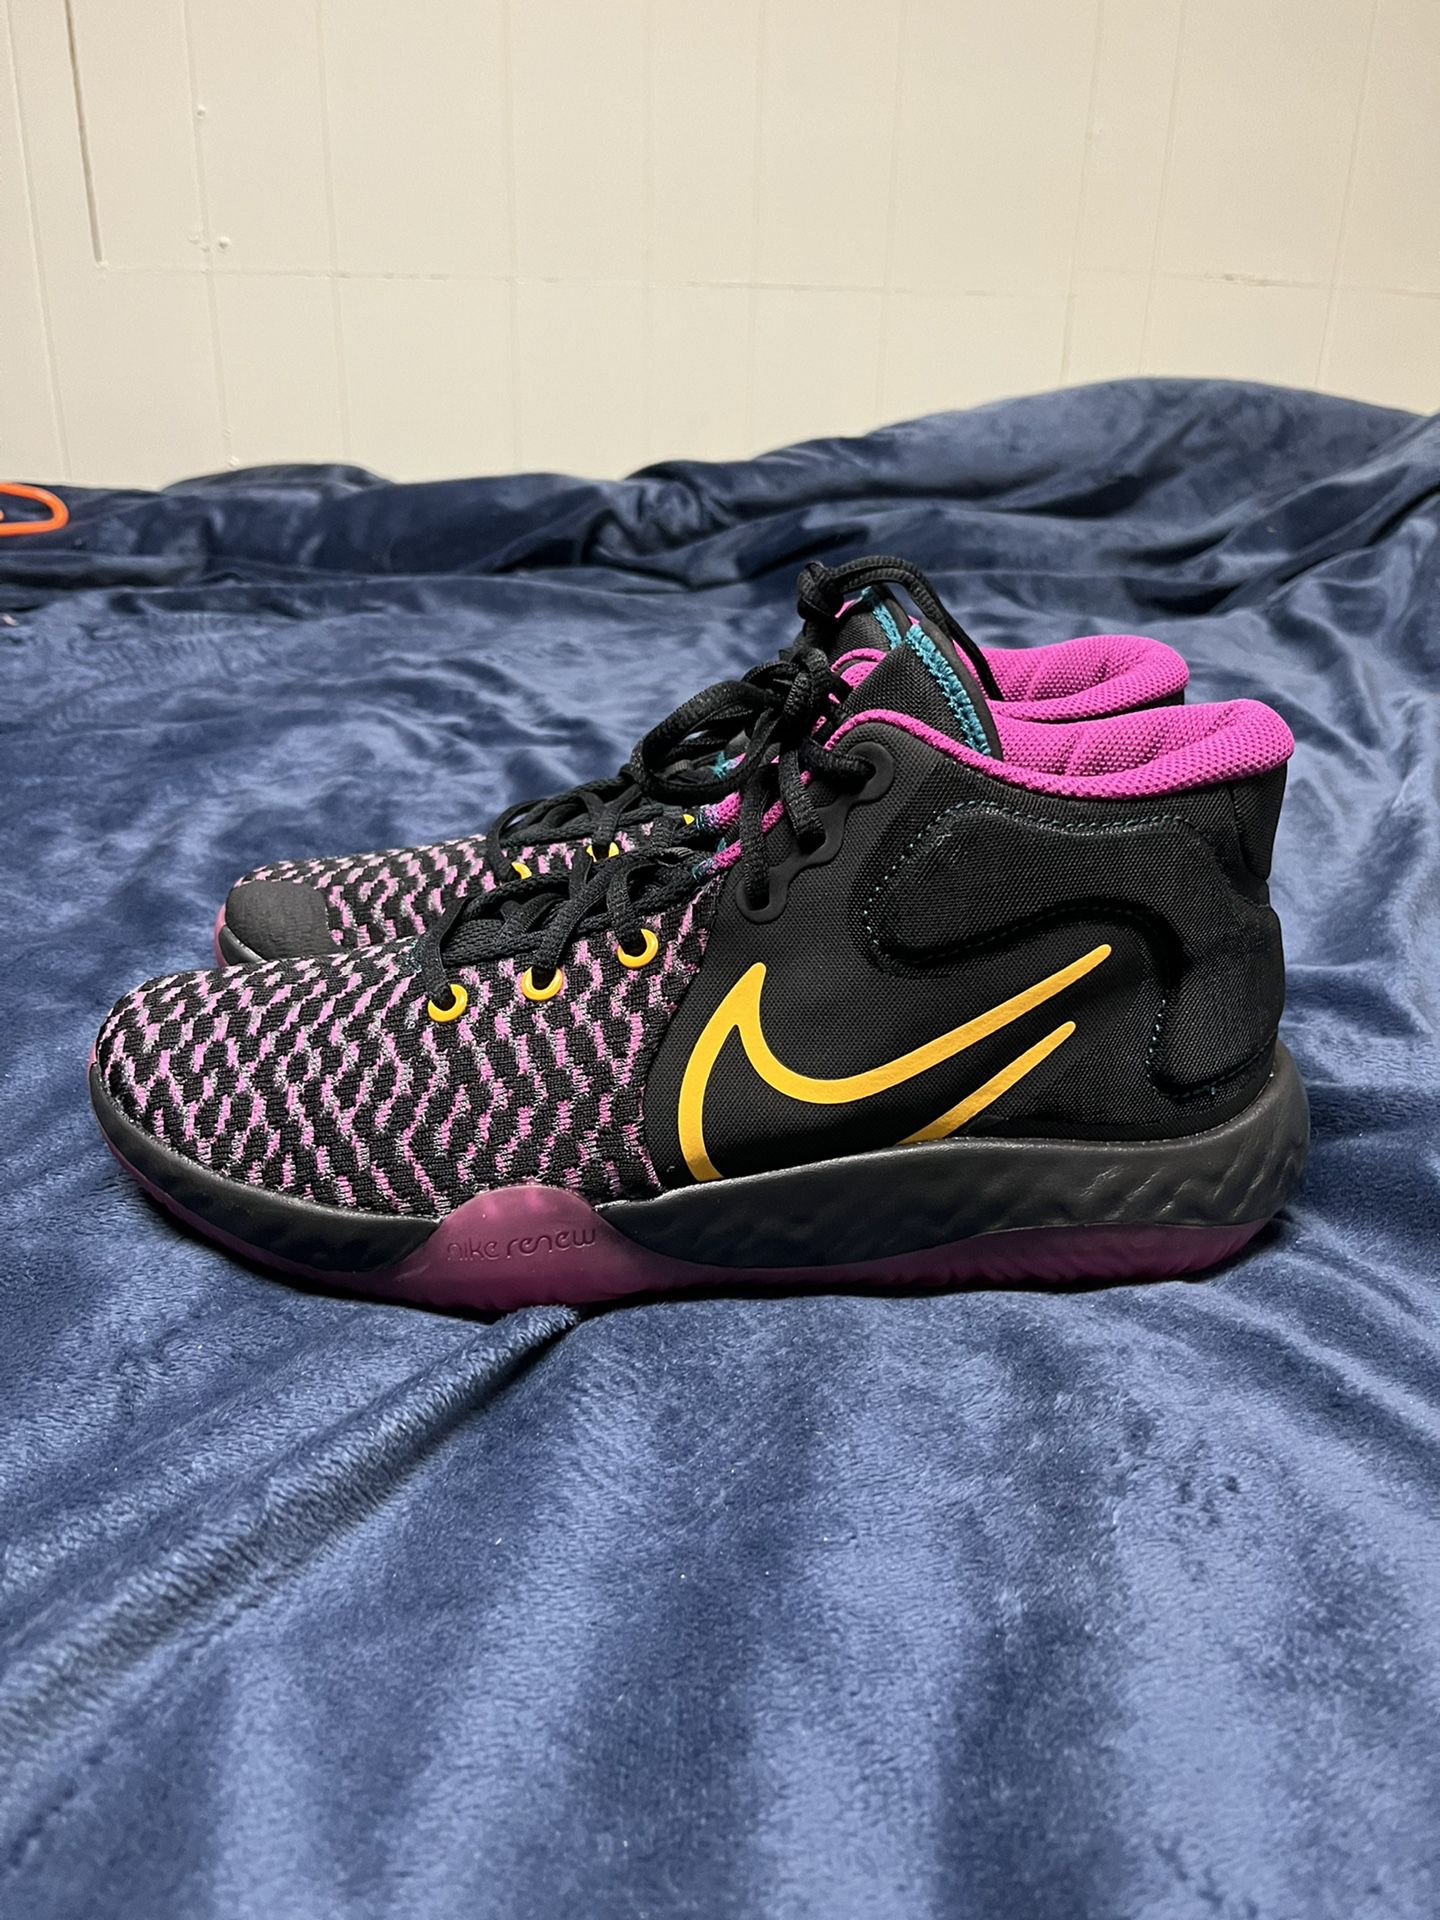 Nike Men’s KD Trey 5 VIII (Black Purple Yellow) - Size 11